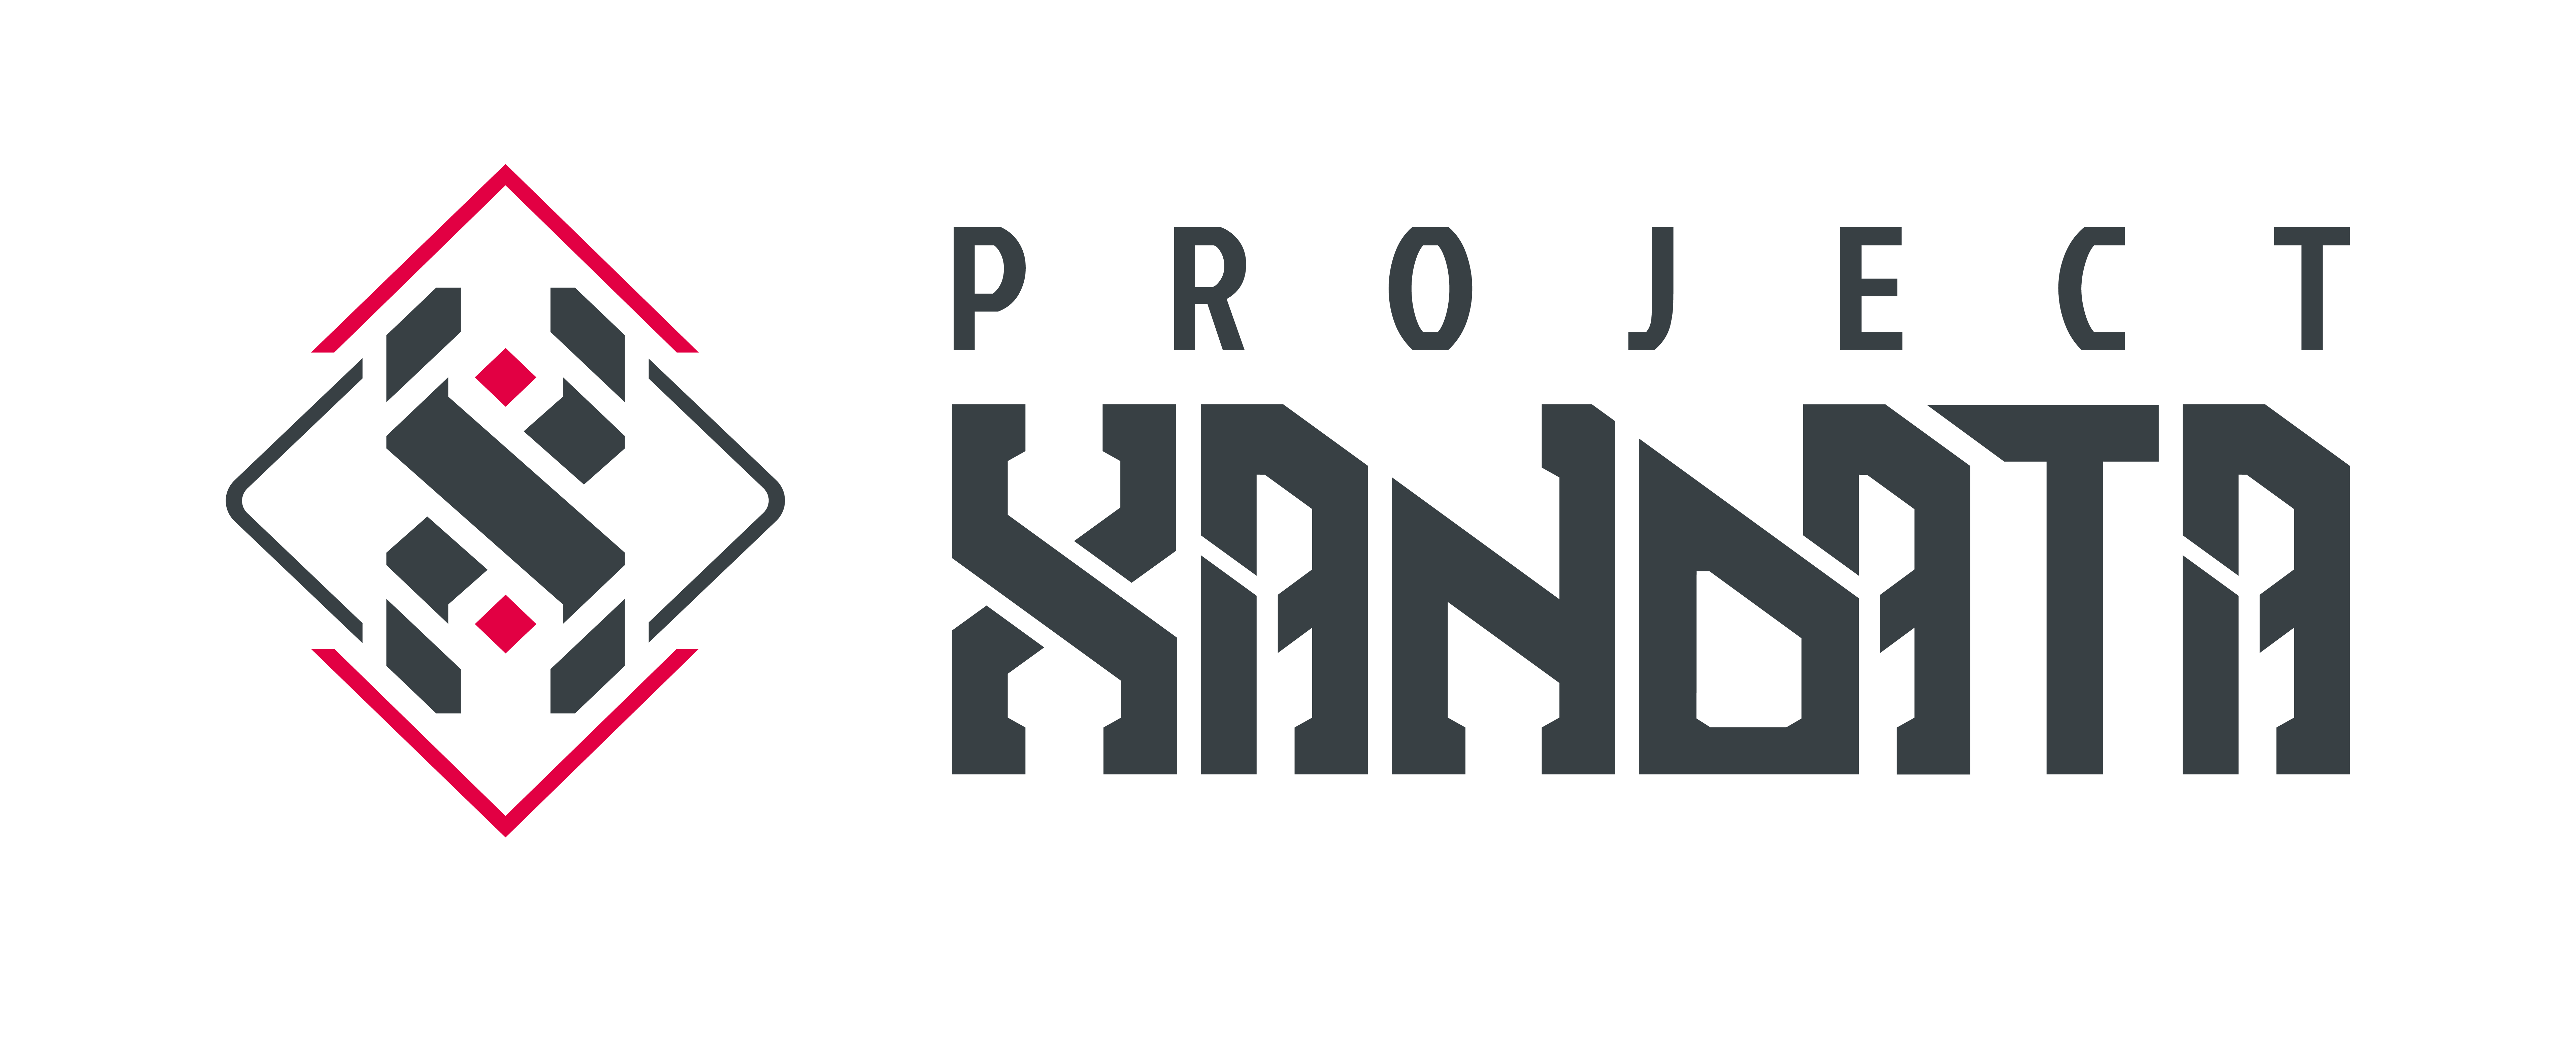 Project Xandata logo